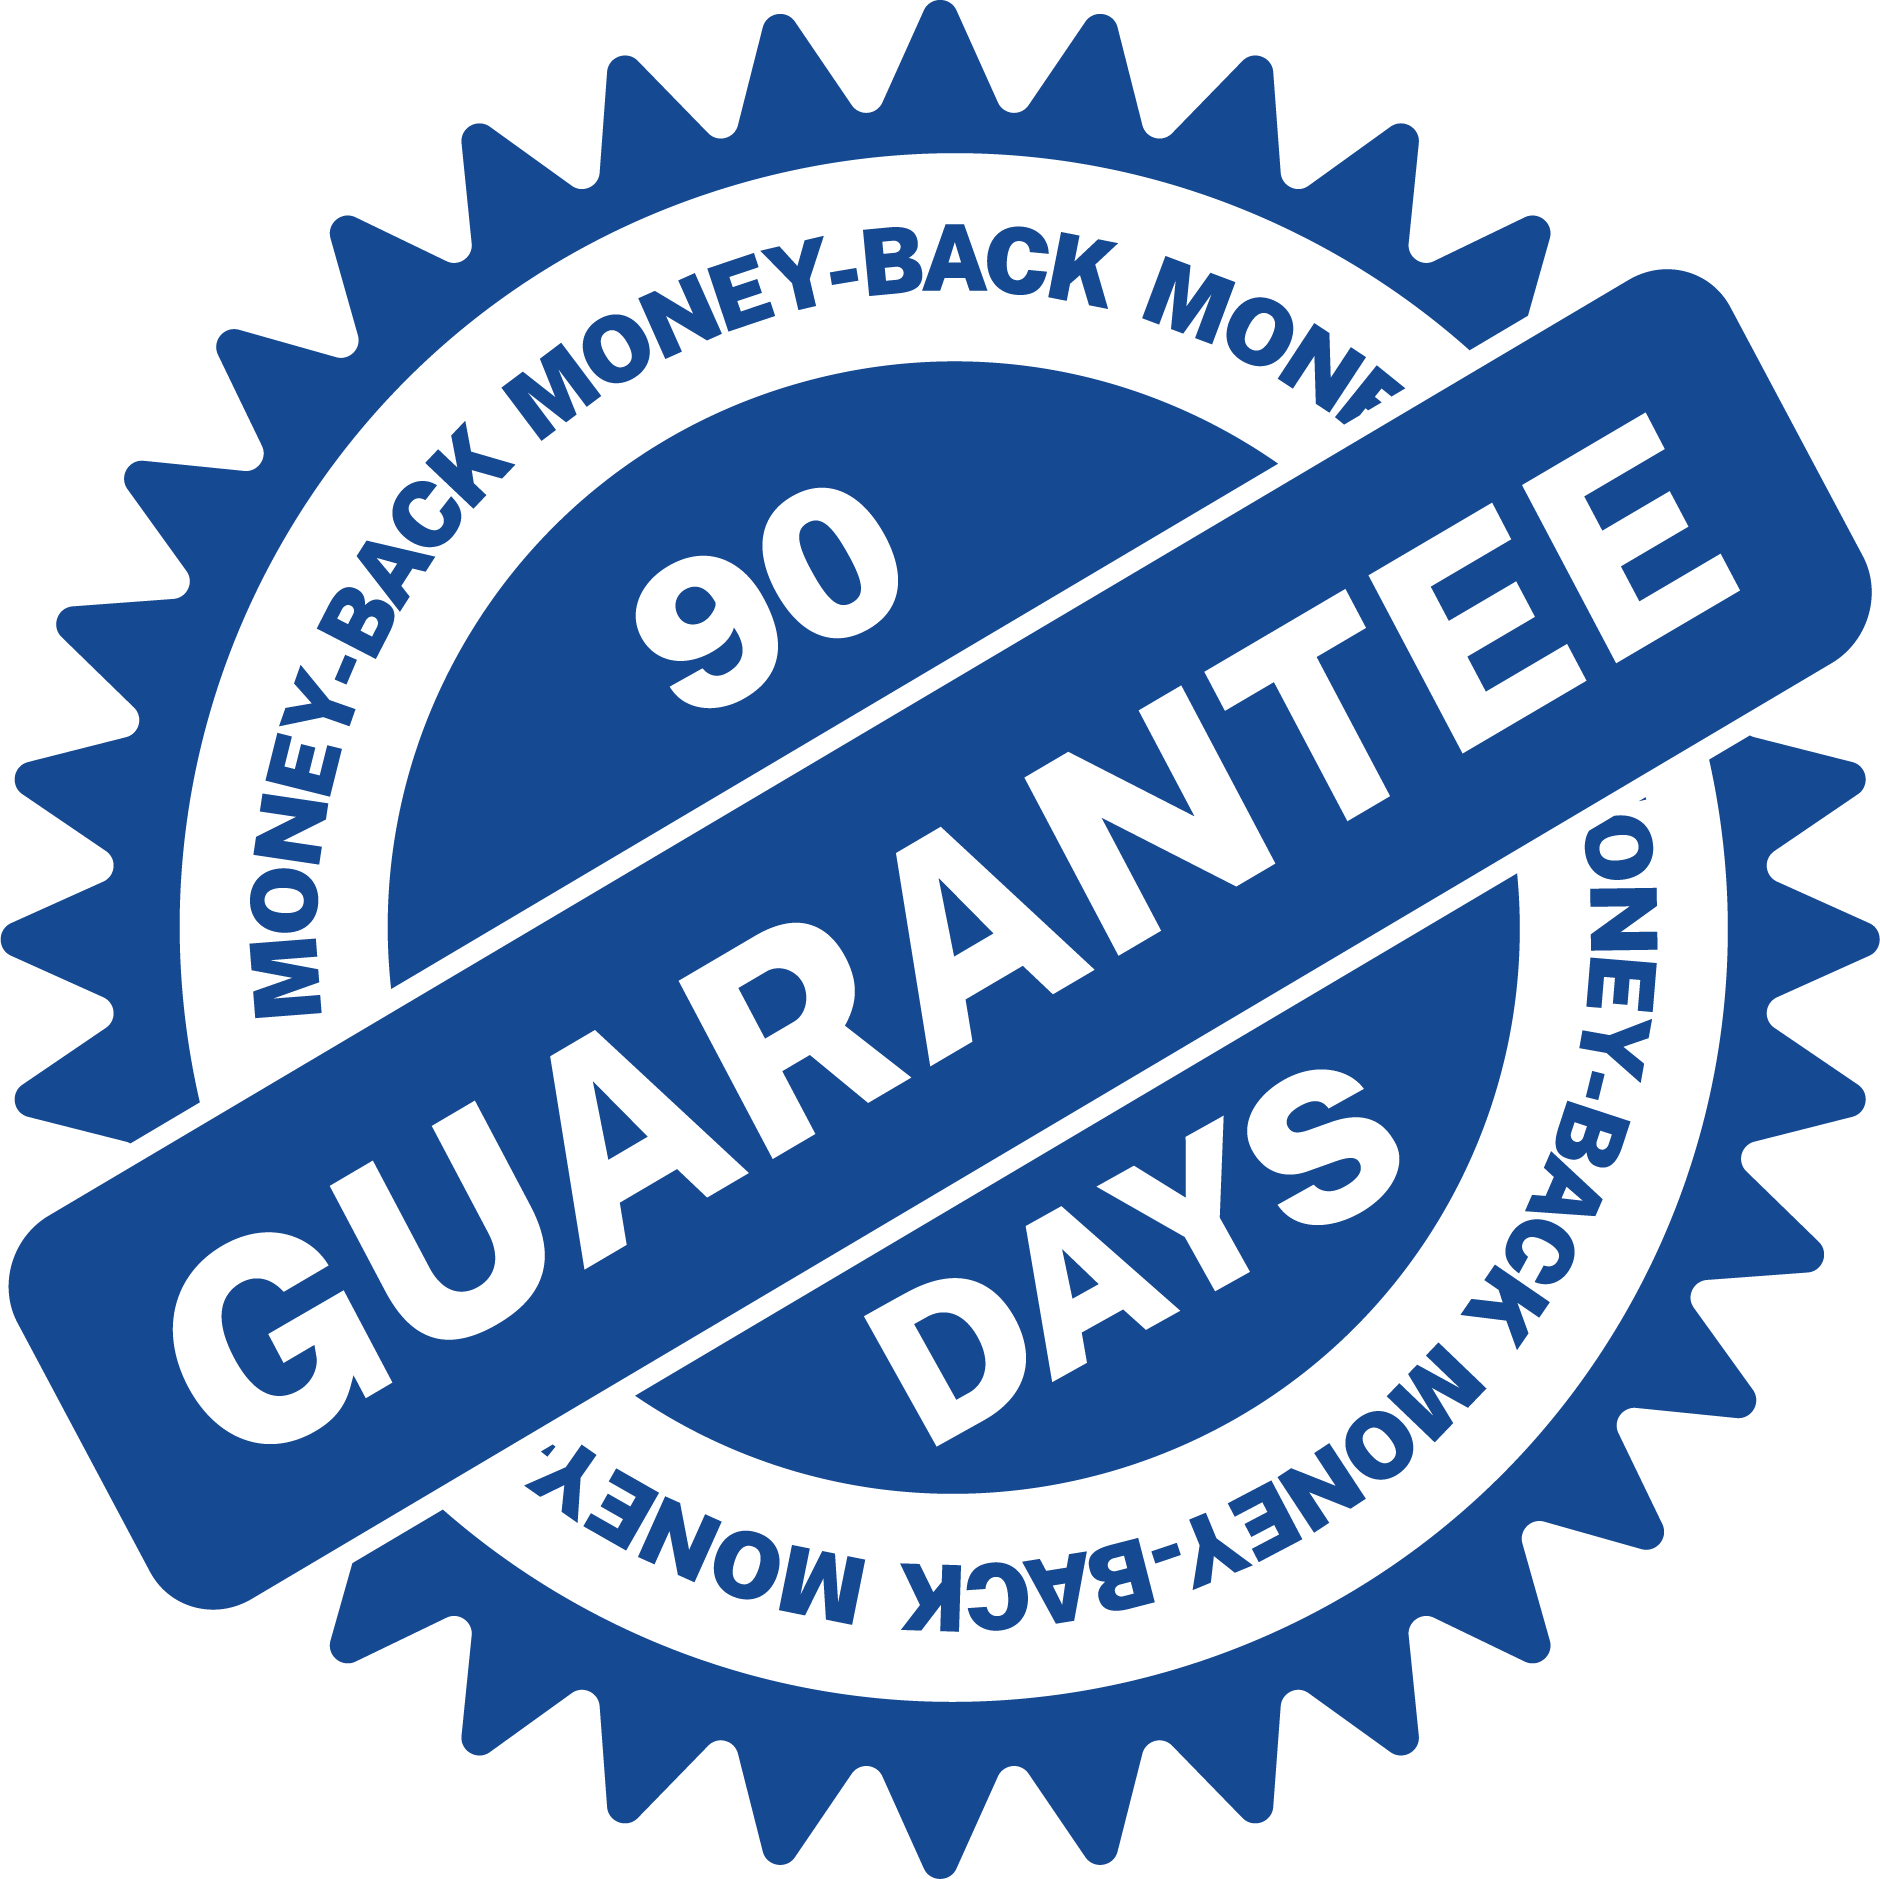 90 Day Money Back Guarantee PNG HD Image